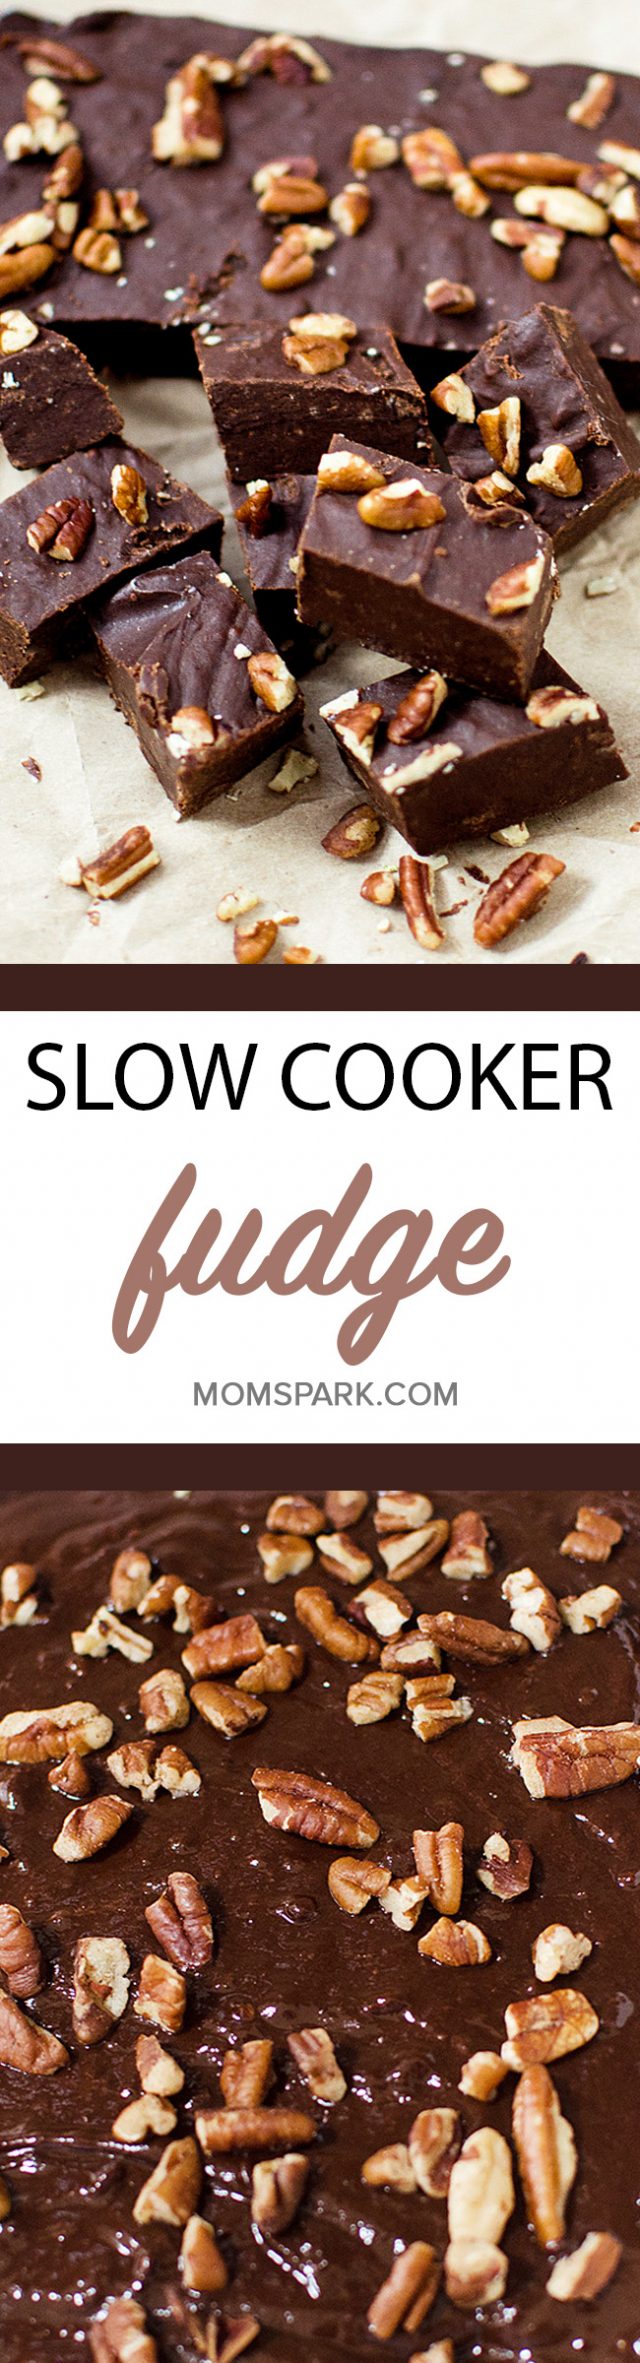 Slow Cooker Crockpot Chocolate Fudge Recipe